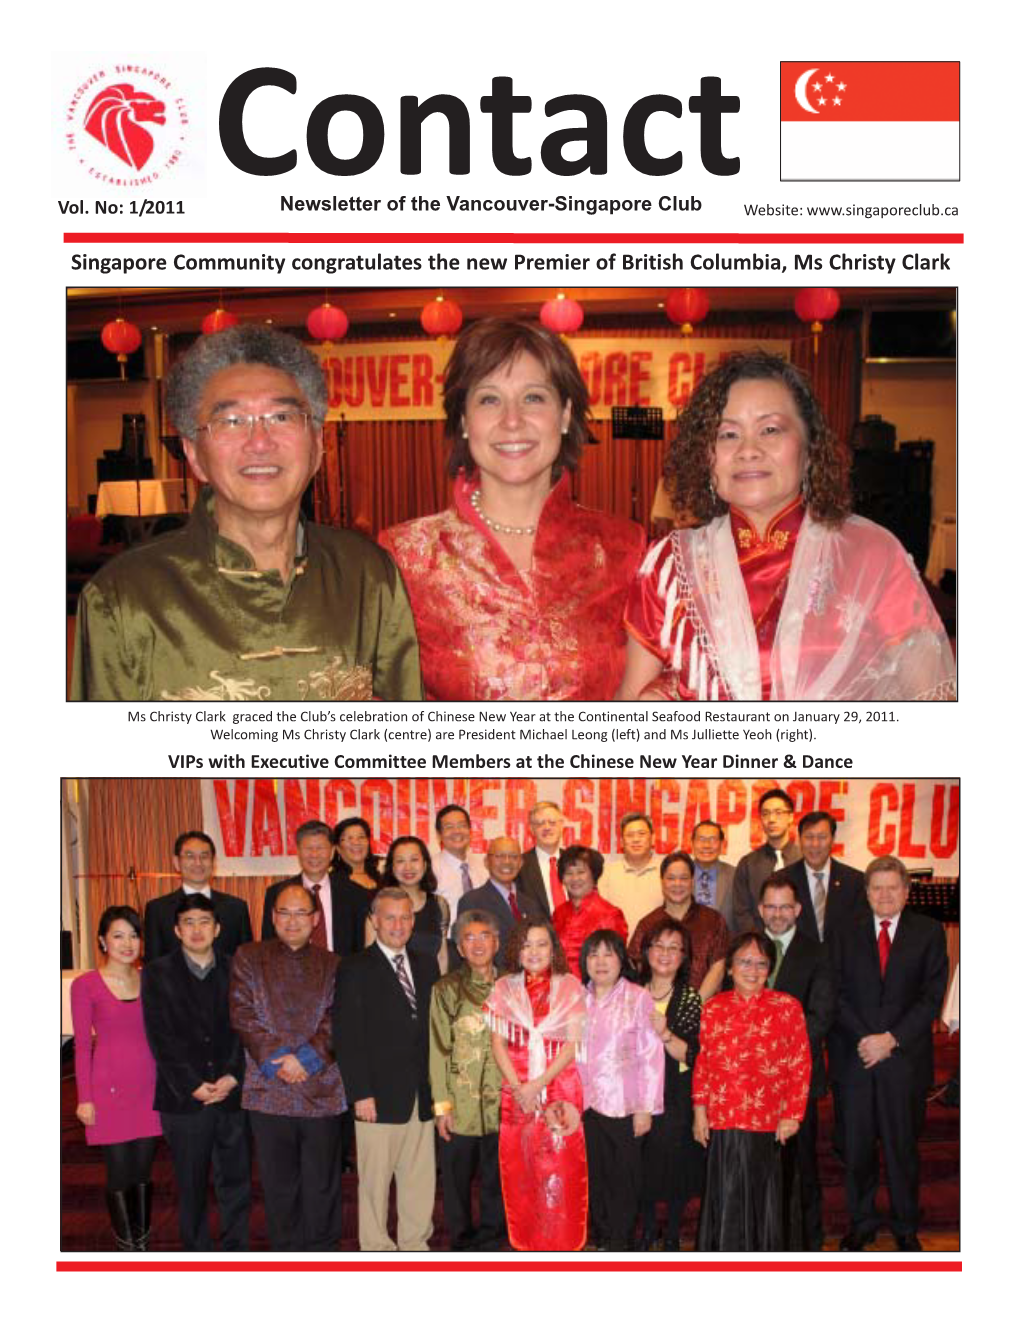 Singapore Community Congratulates the New Premier of British Columbia, Ms Christy Clark